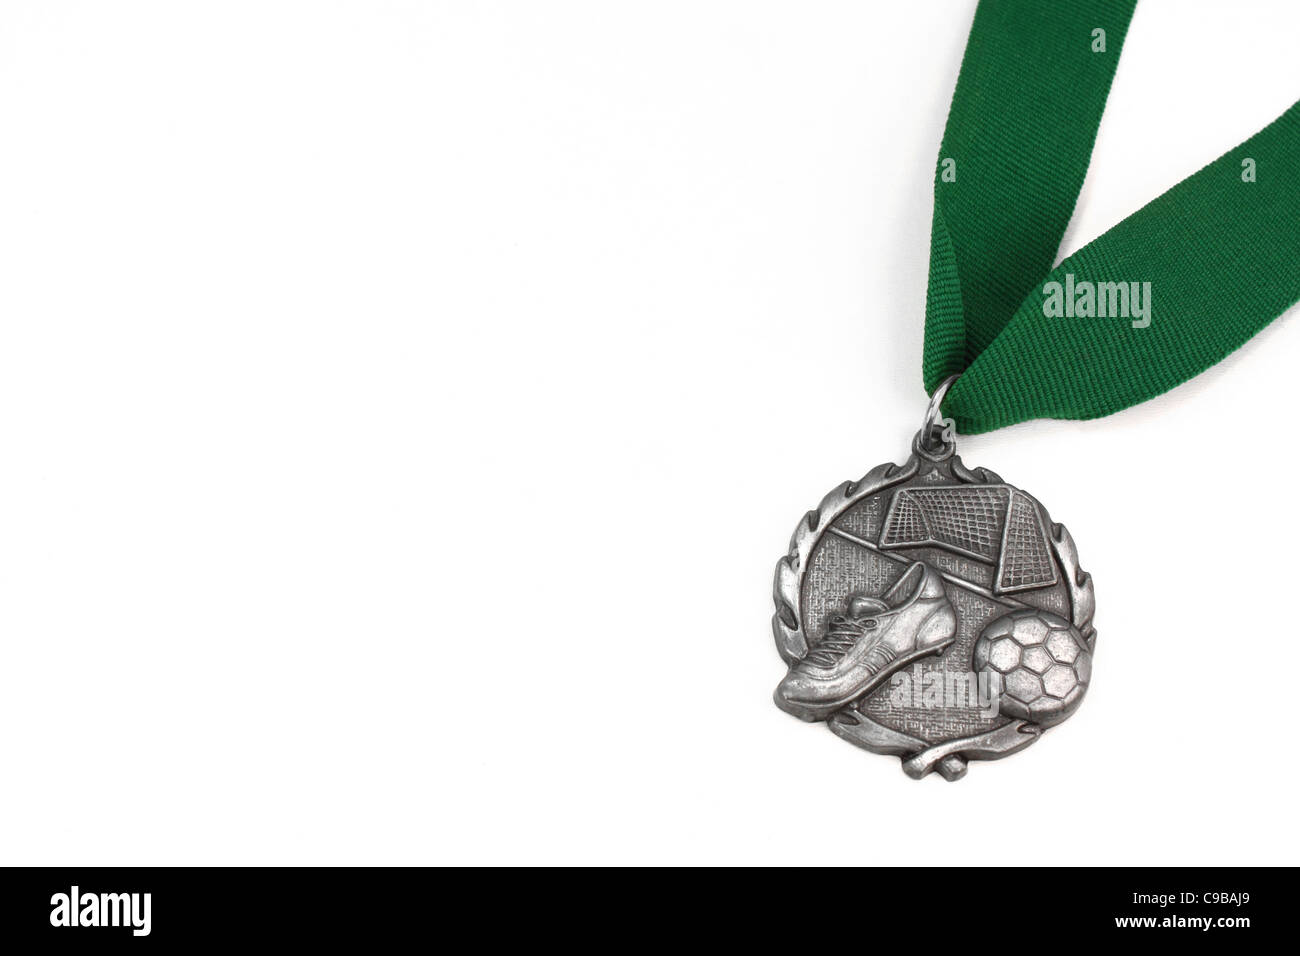 Football medallion on white background Stock Photo